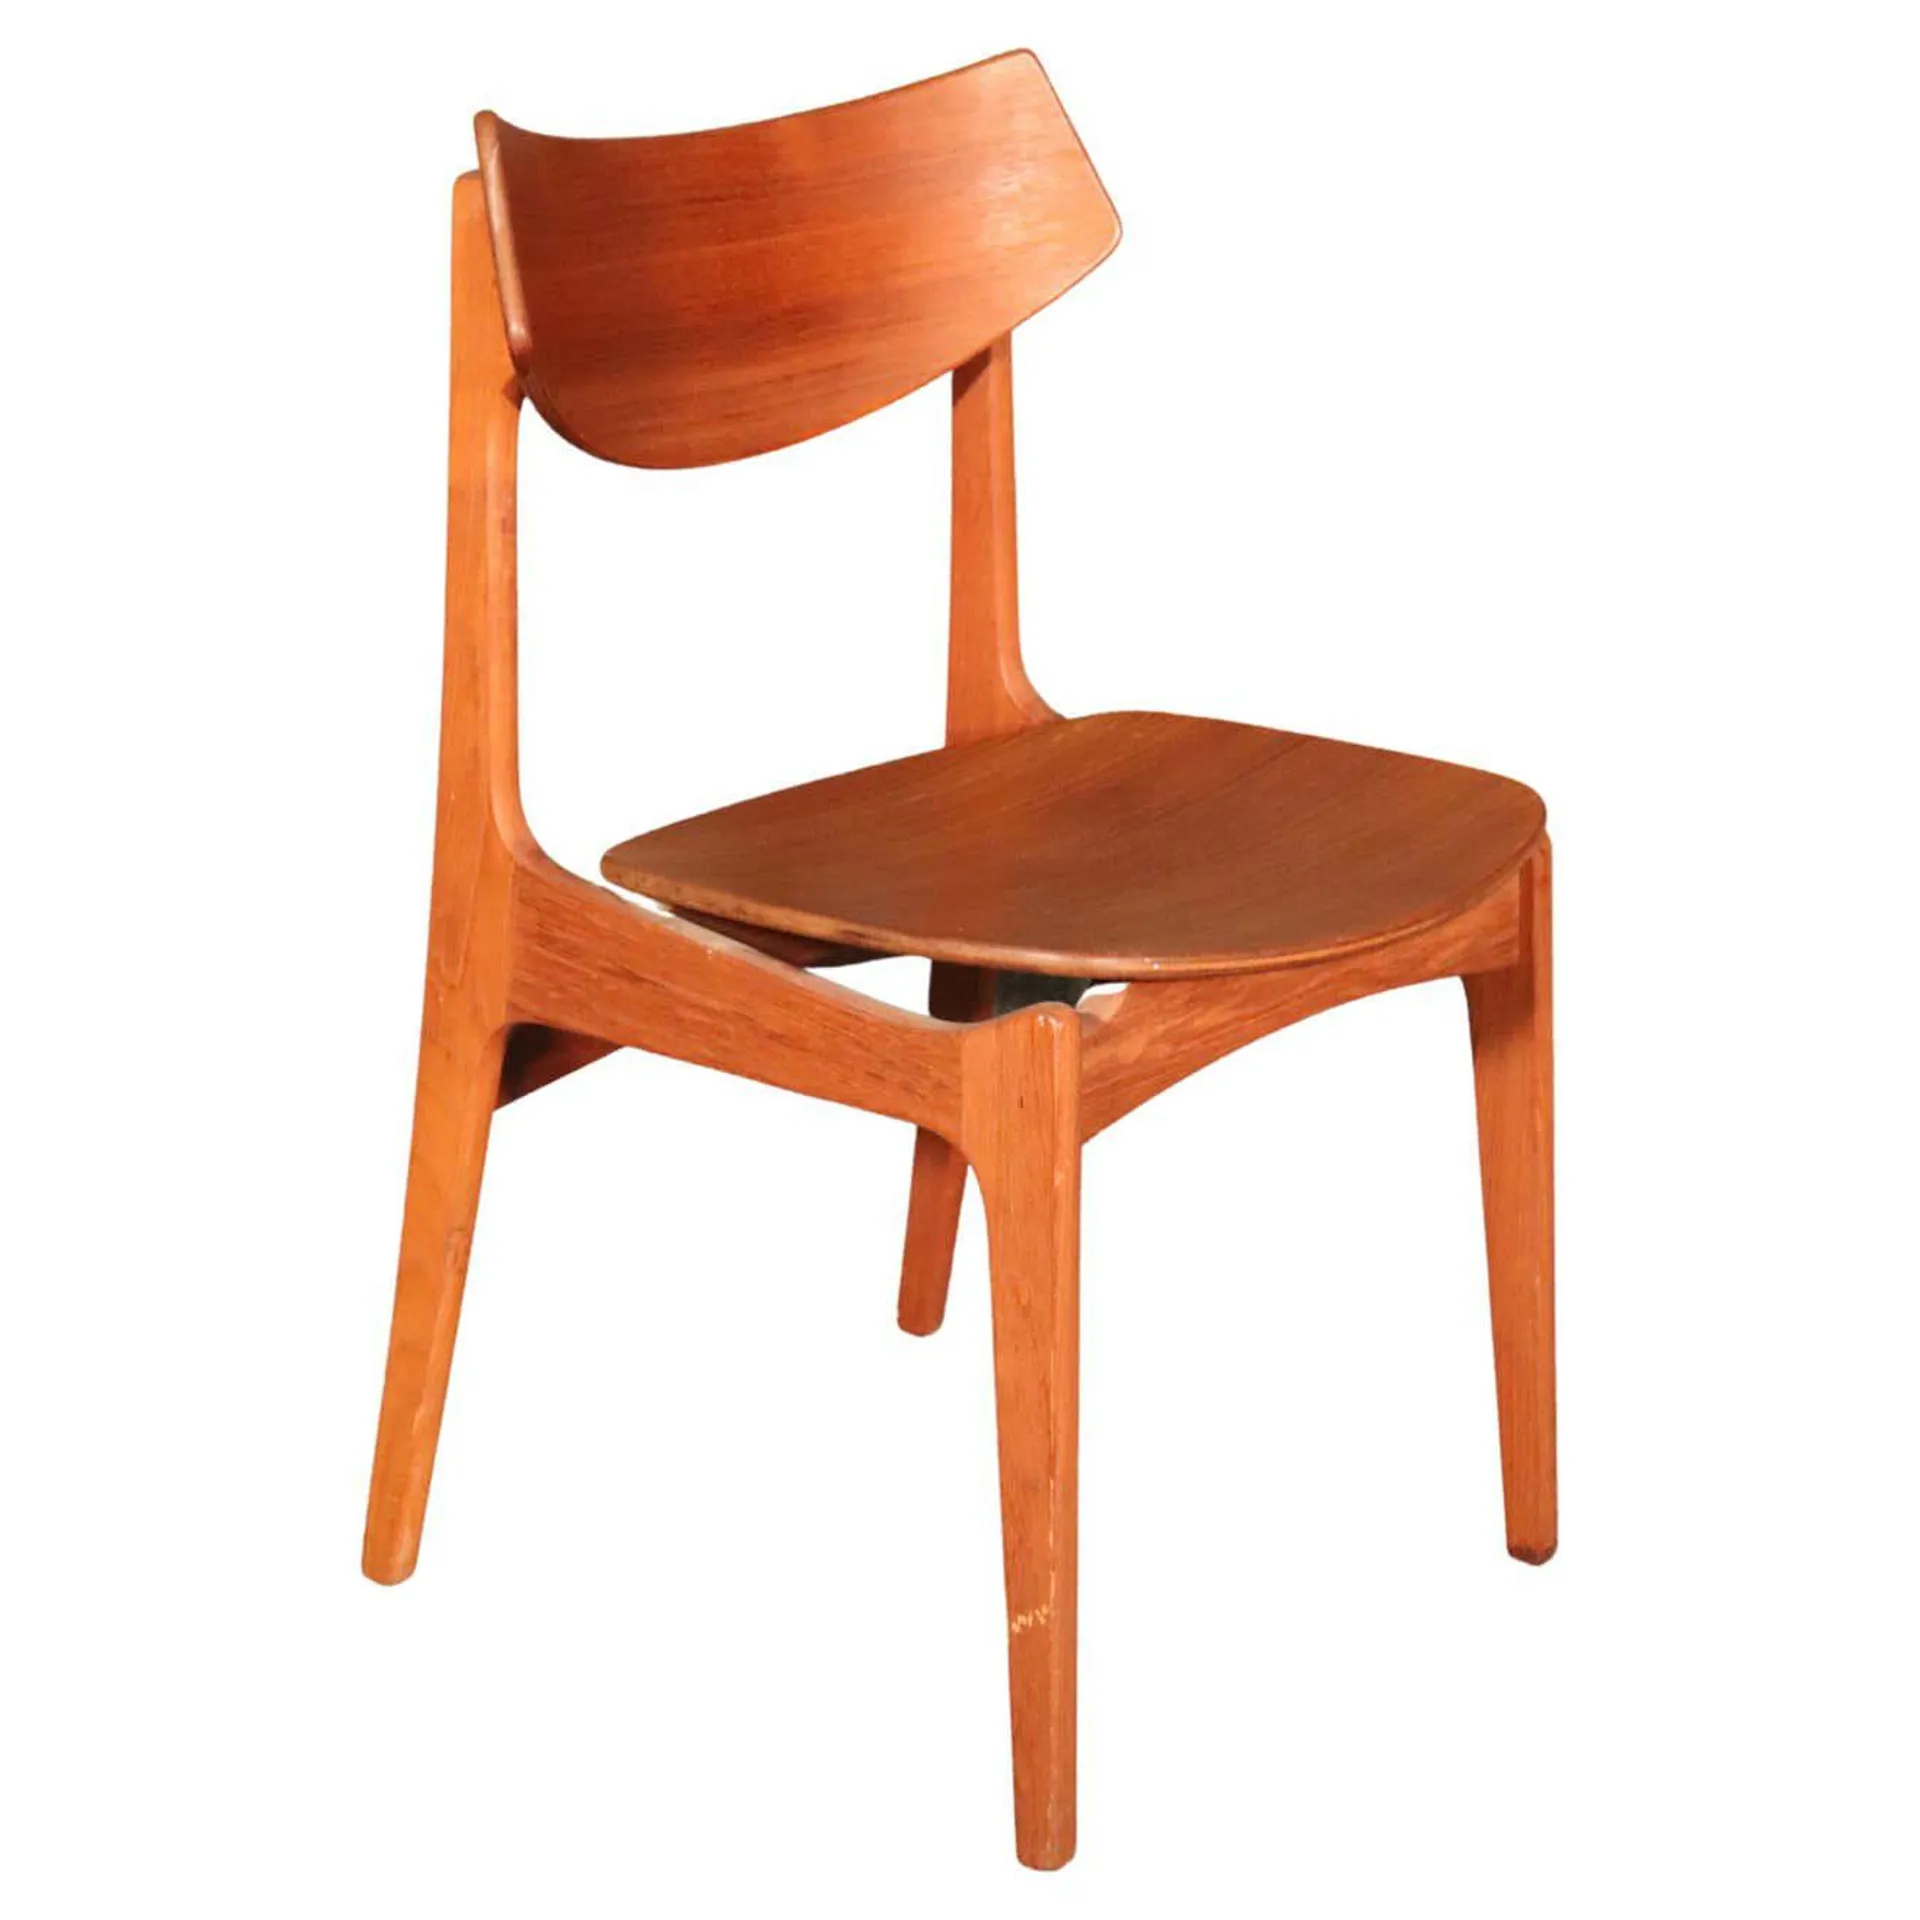 Danish Desk Chair by Funder-Schmidt & Madsen